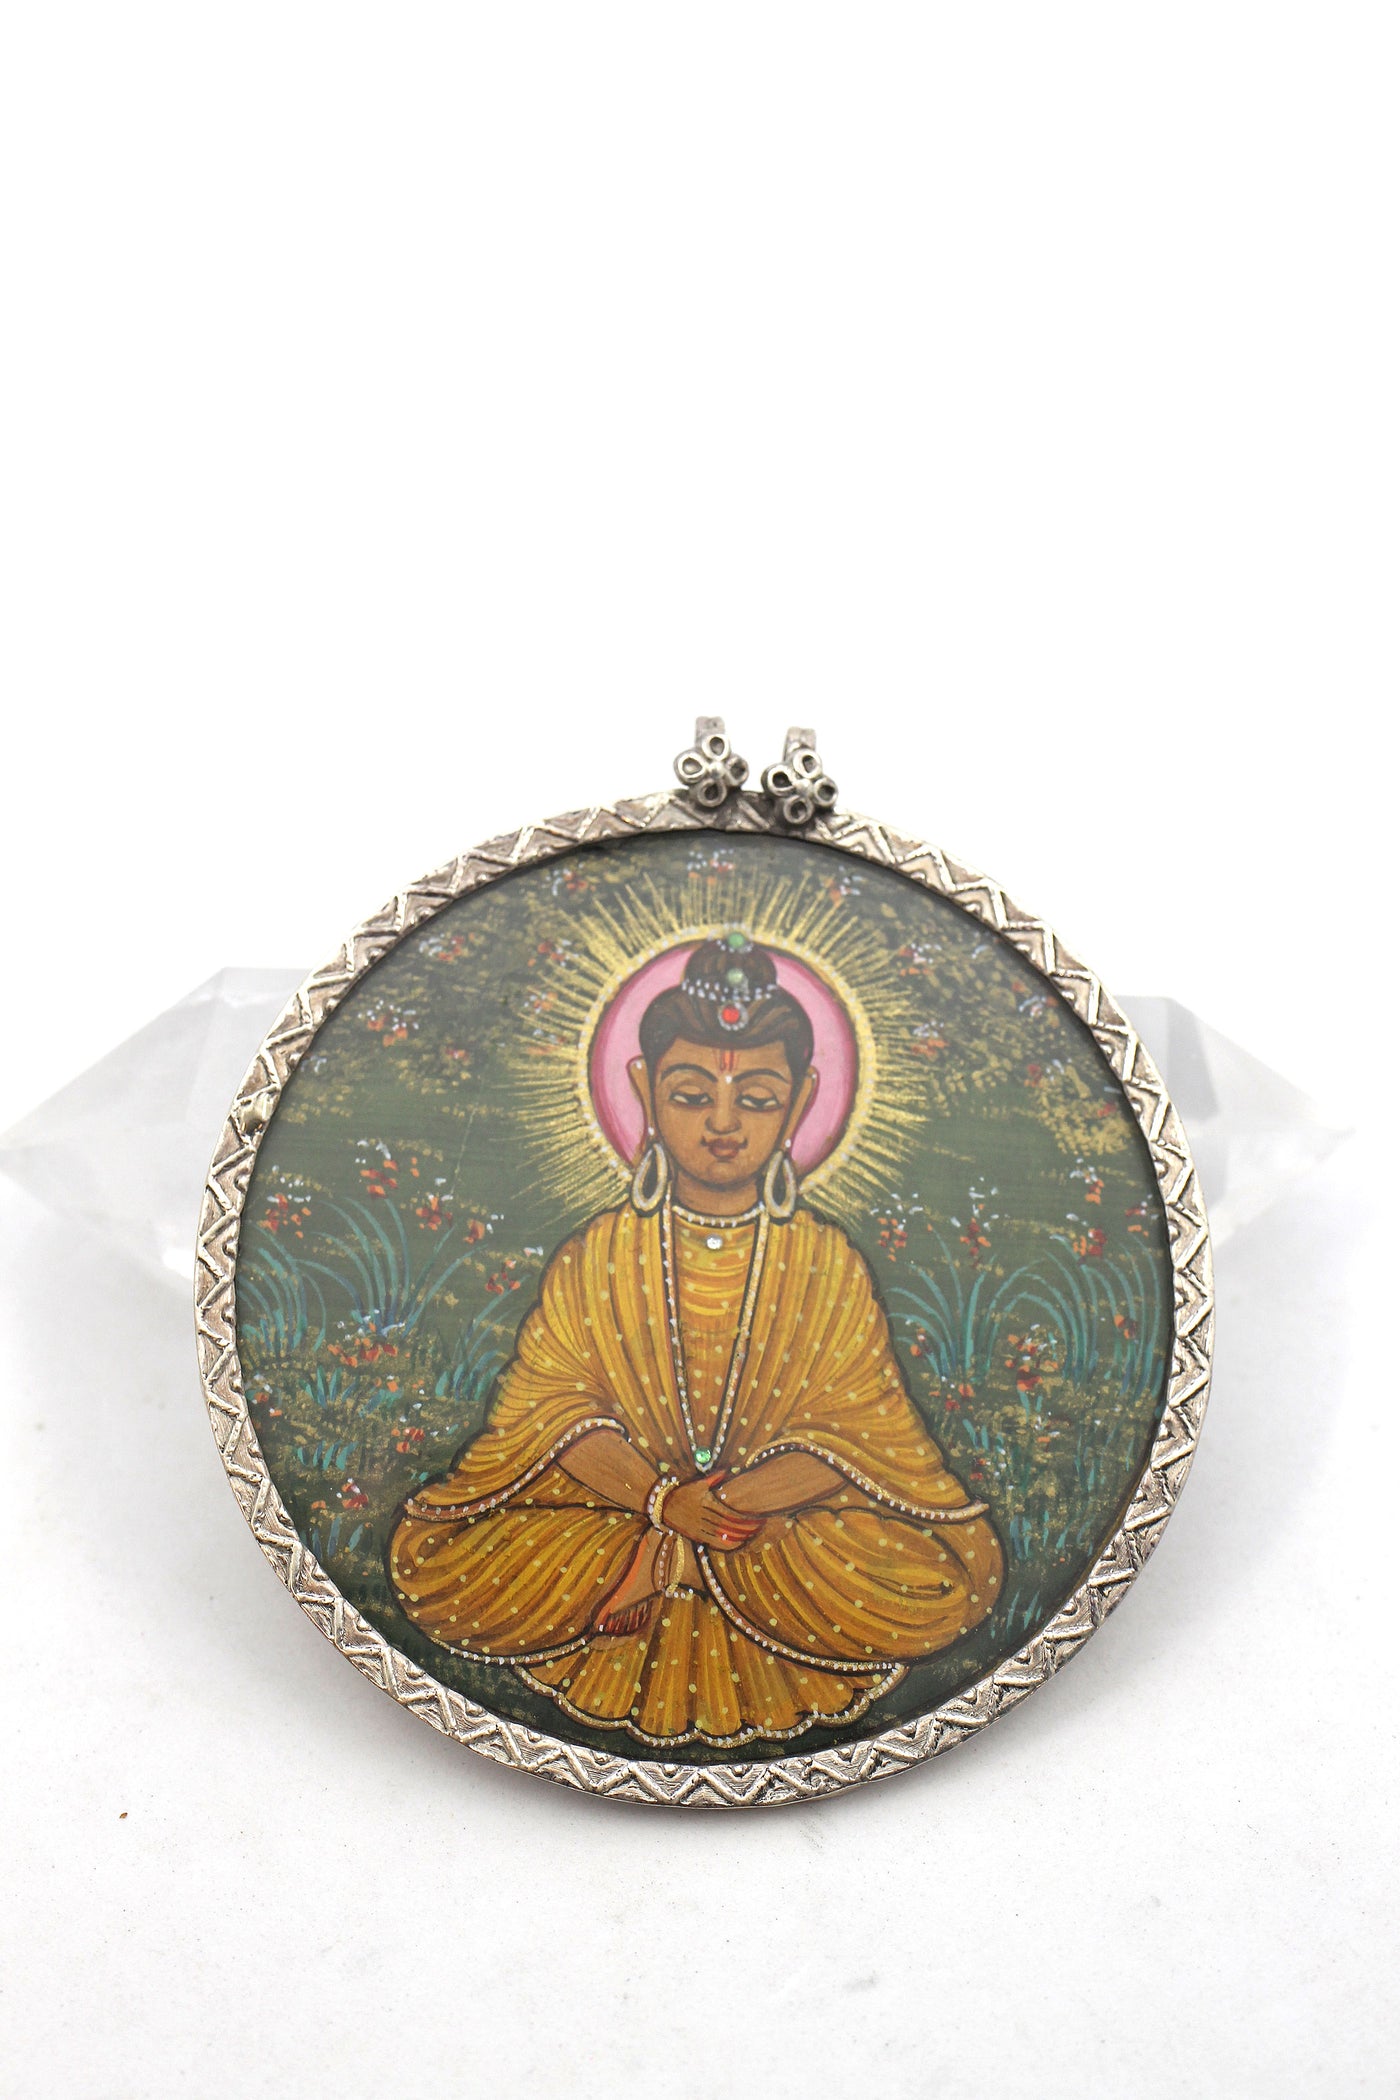 Buddha Hand Painted Indian Glass & Silver Pendant, Large Spiritual Pendant